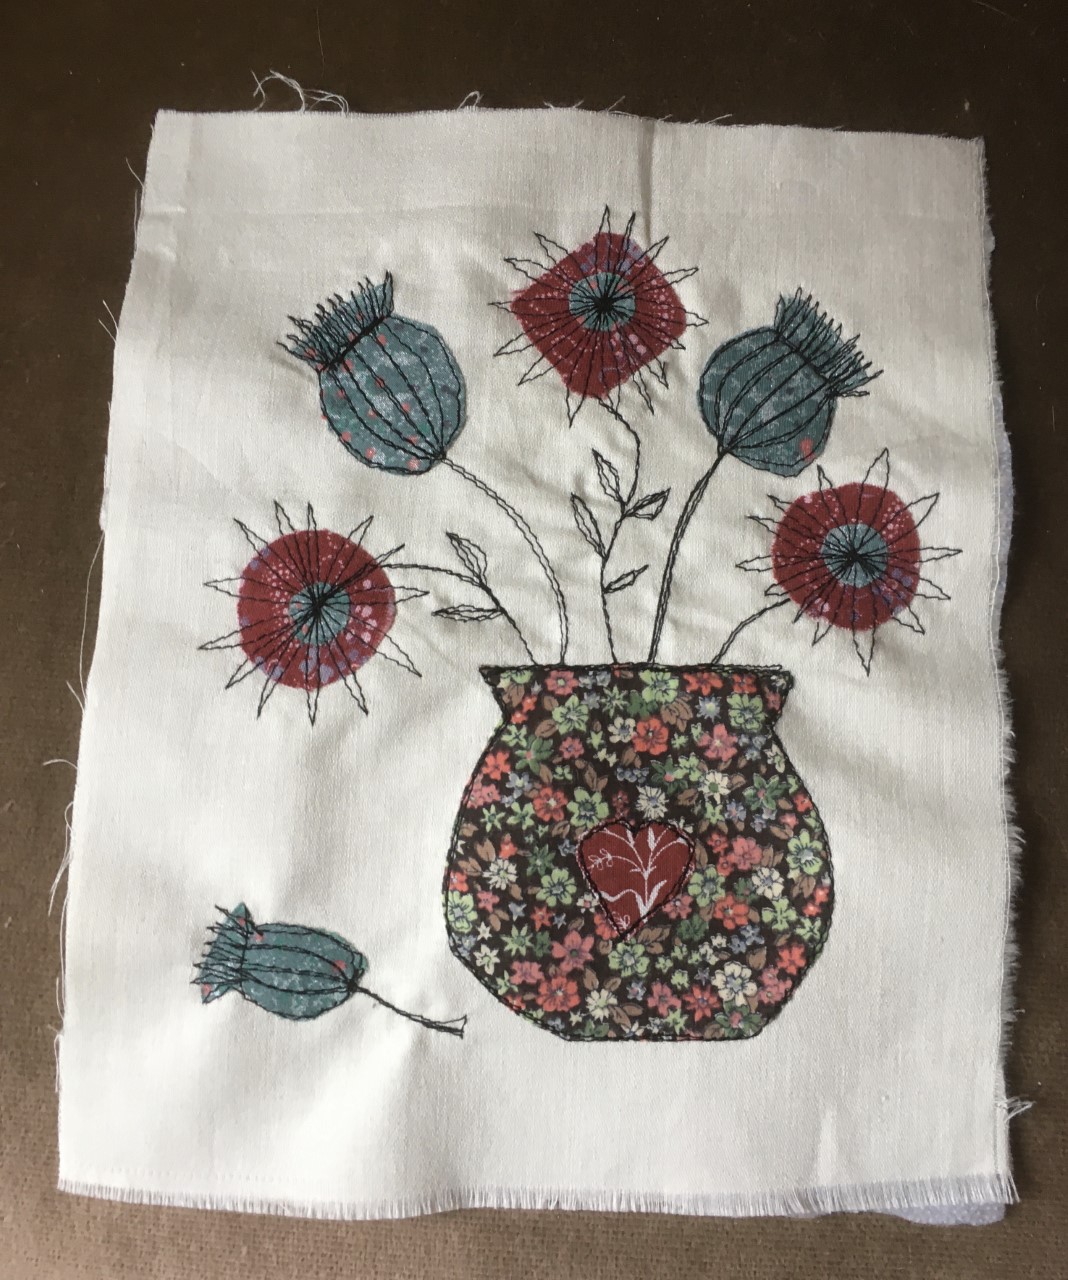 Embroidery via Zoom